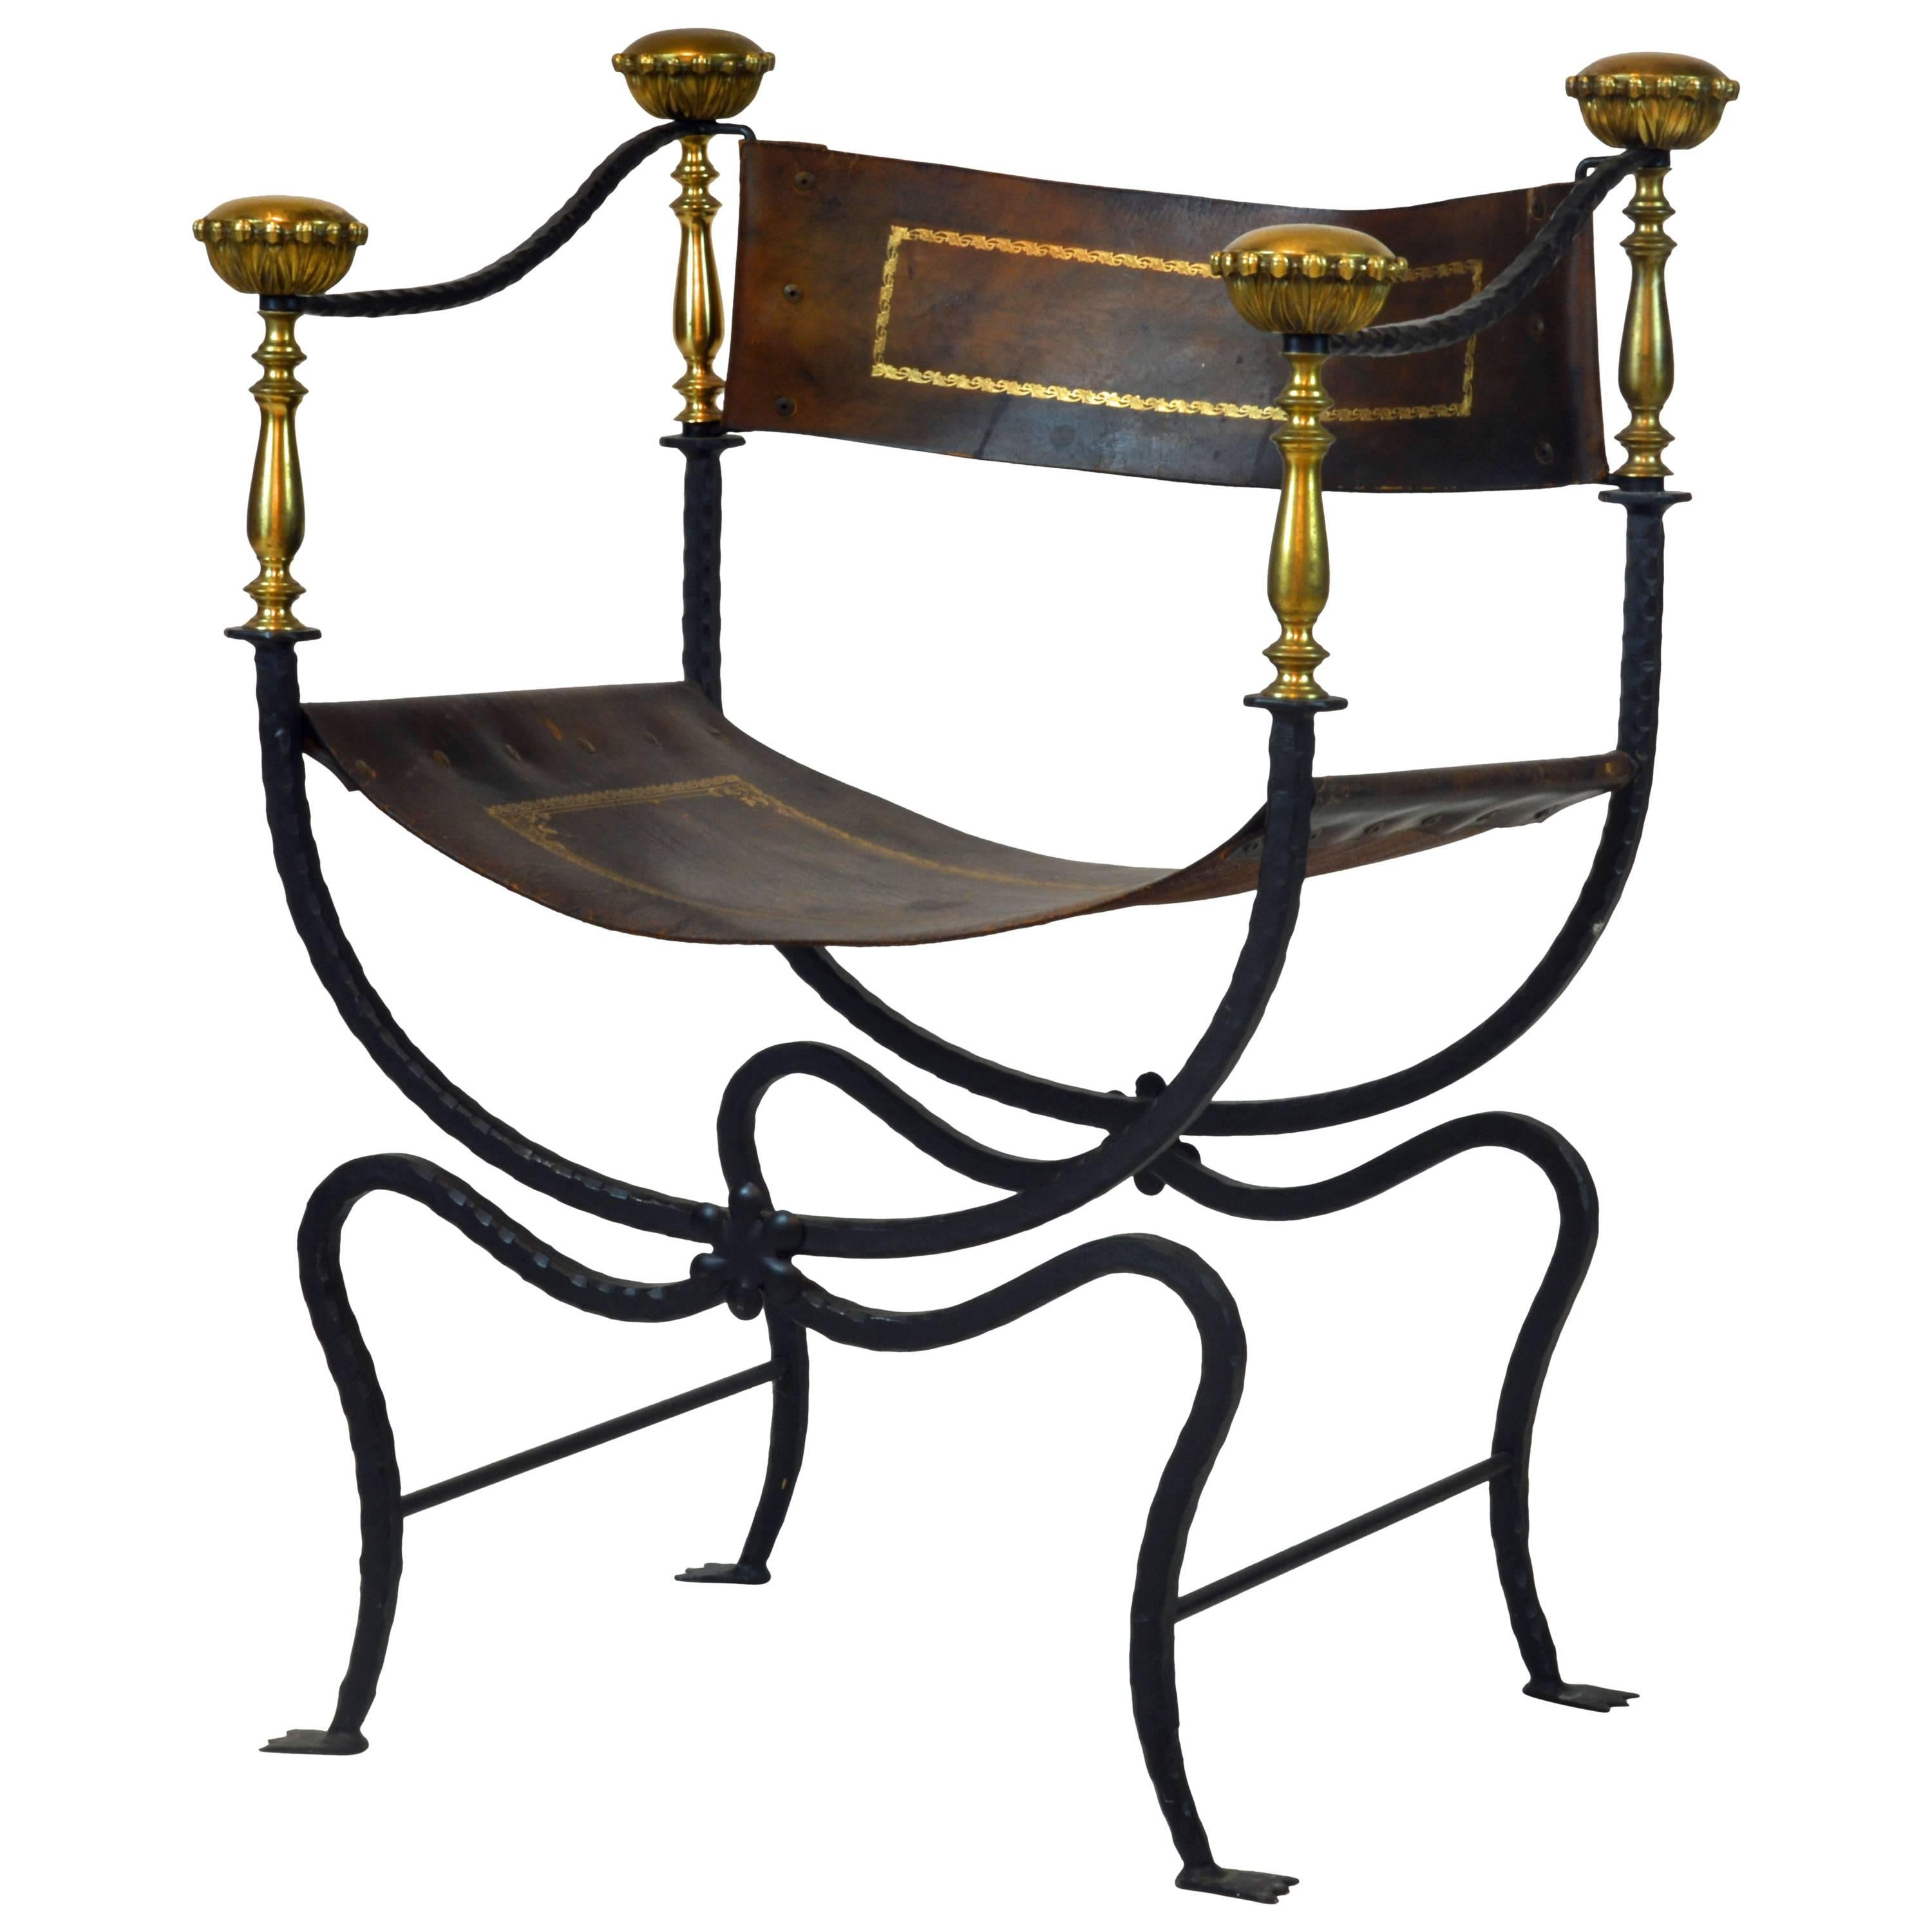 Renaissance Style Wrought Iron and Bronze Savonarola Chair with Original Leather